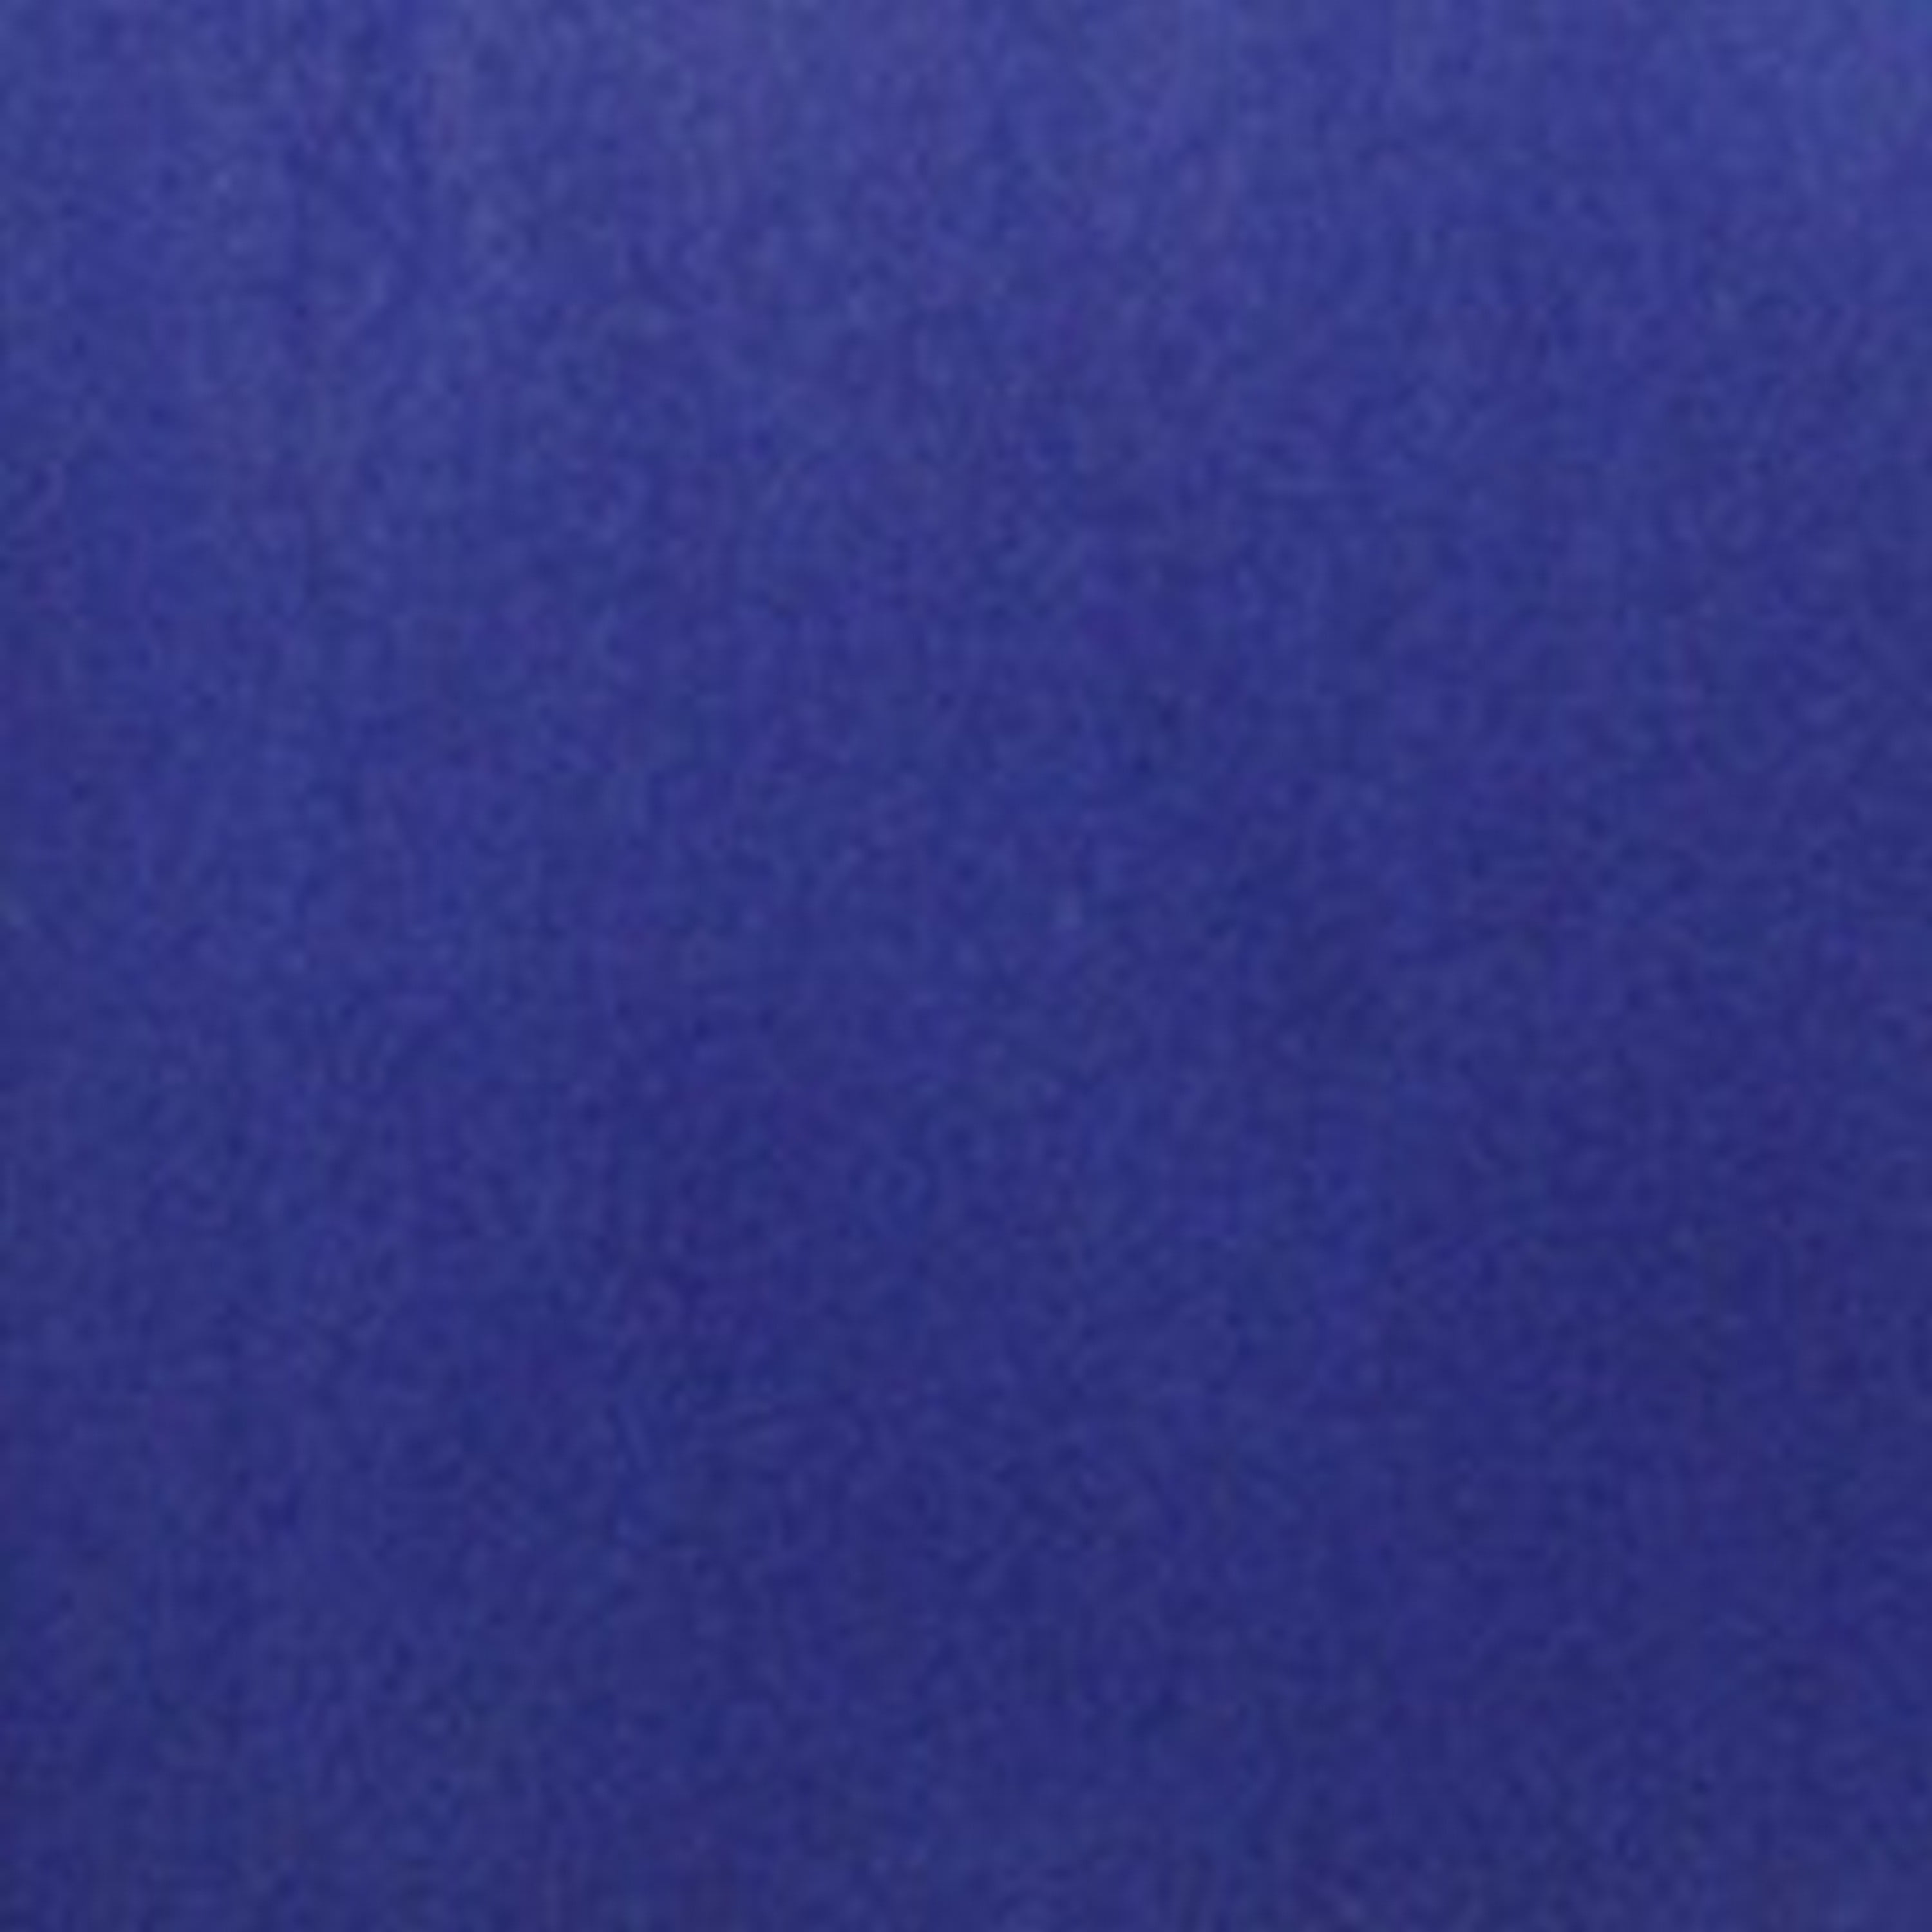 0148.30-12 PIECES INDIGO BLUE OPAL 1"x 1" BULLSEYE 3mm THICK GLASS 90 COE 